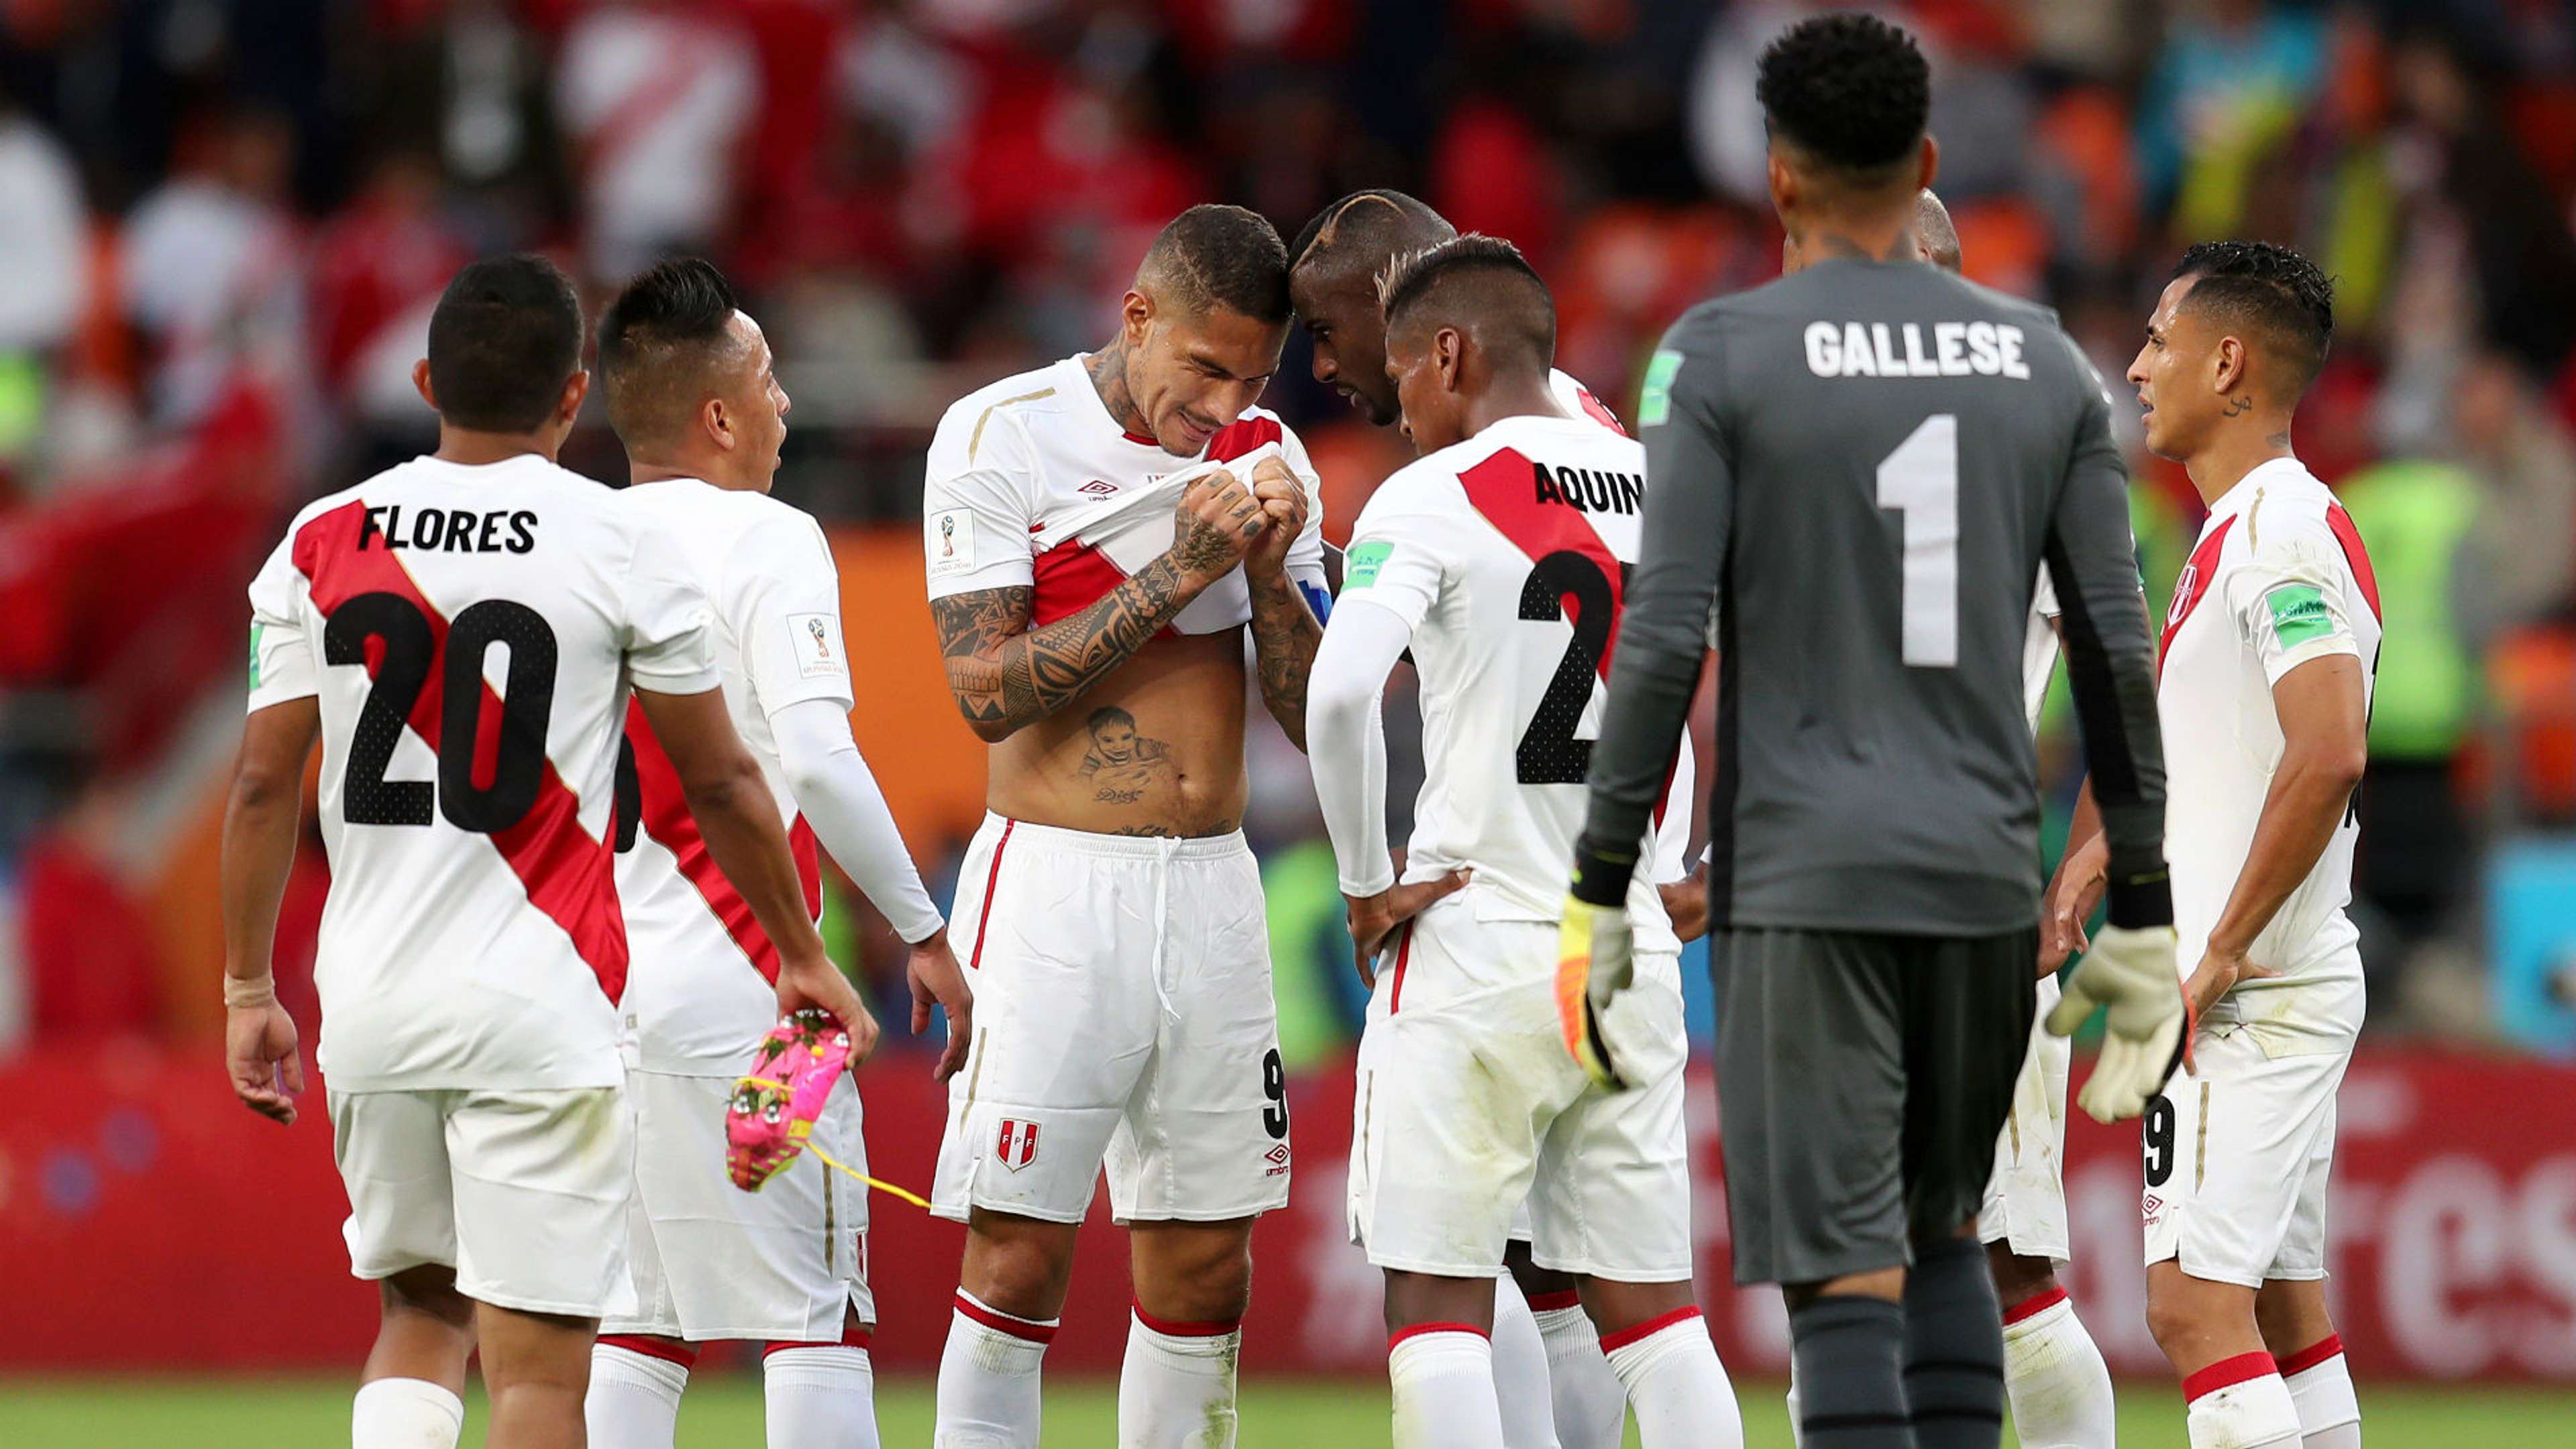 France Peru World Cup 2018 21062018